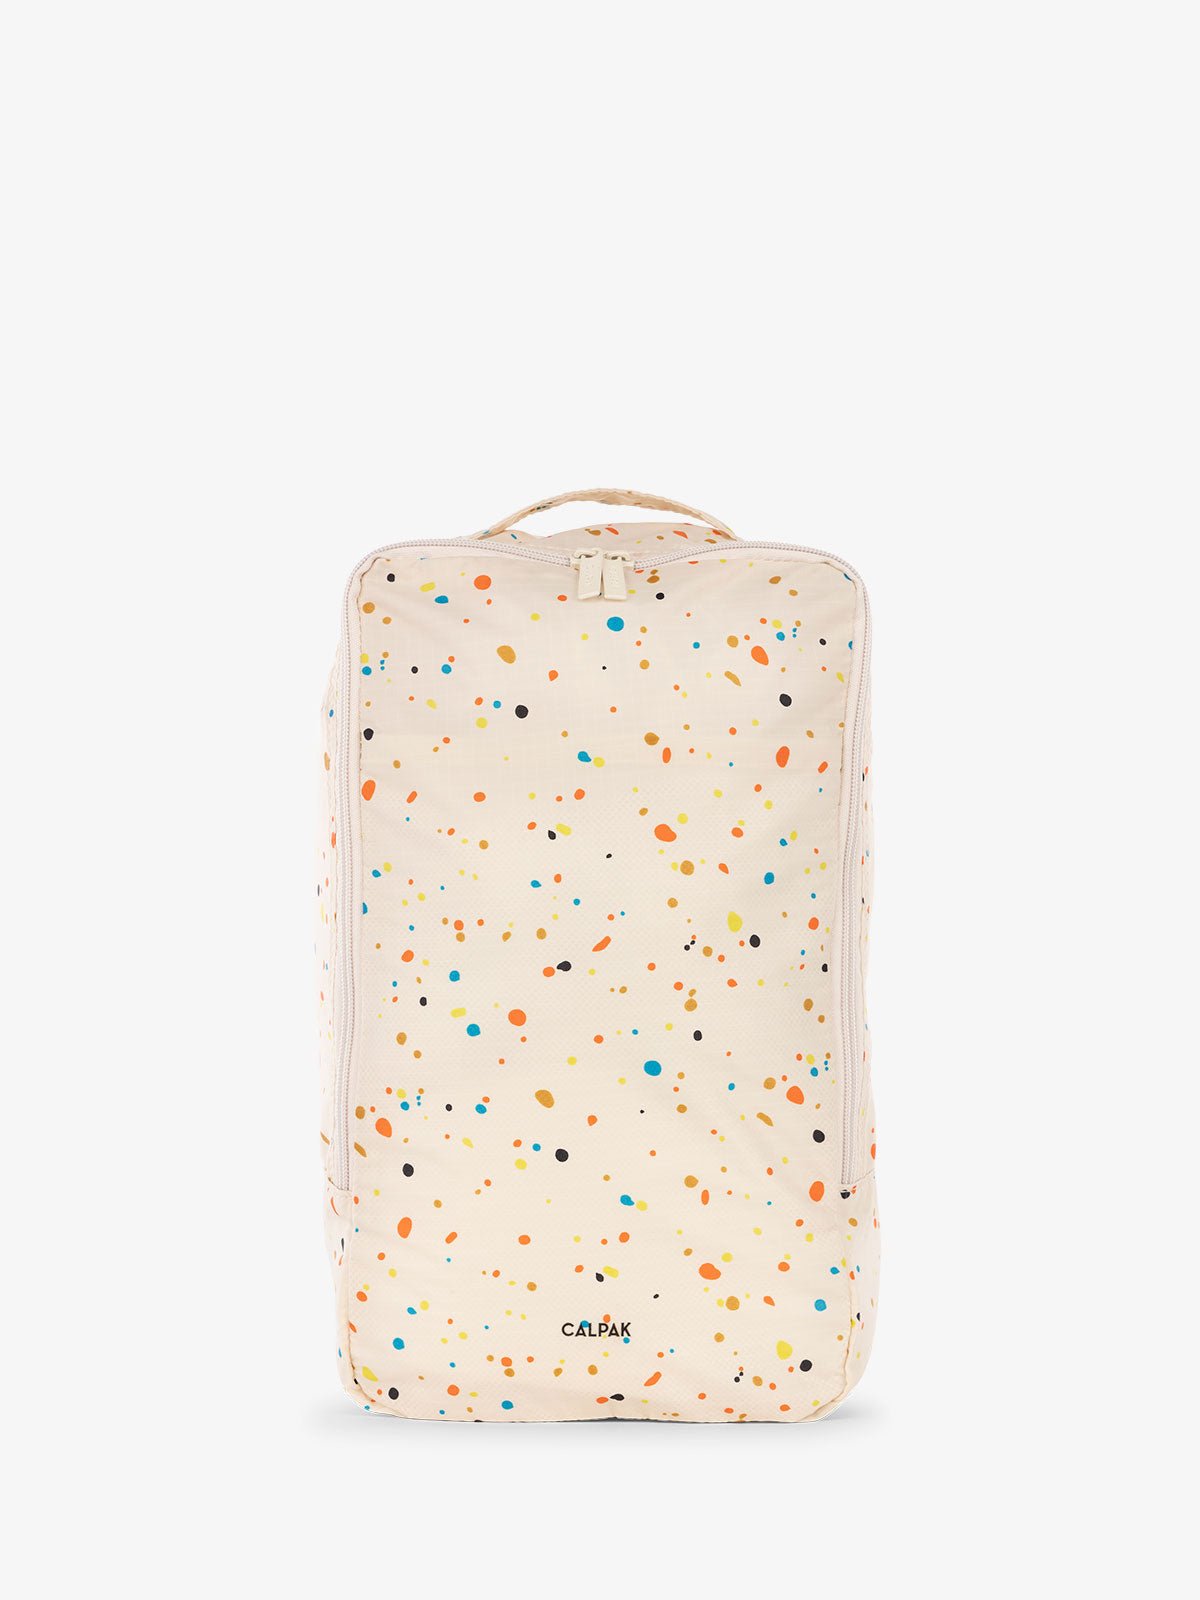 CALPAK Compakt shoe storage travel bag with handle in speckle